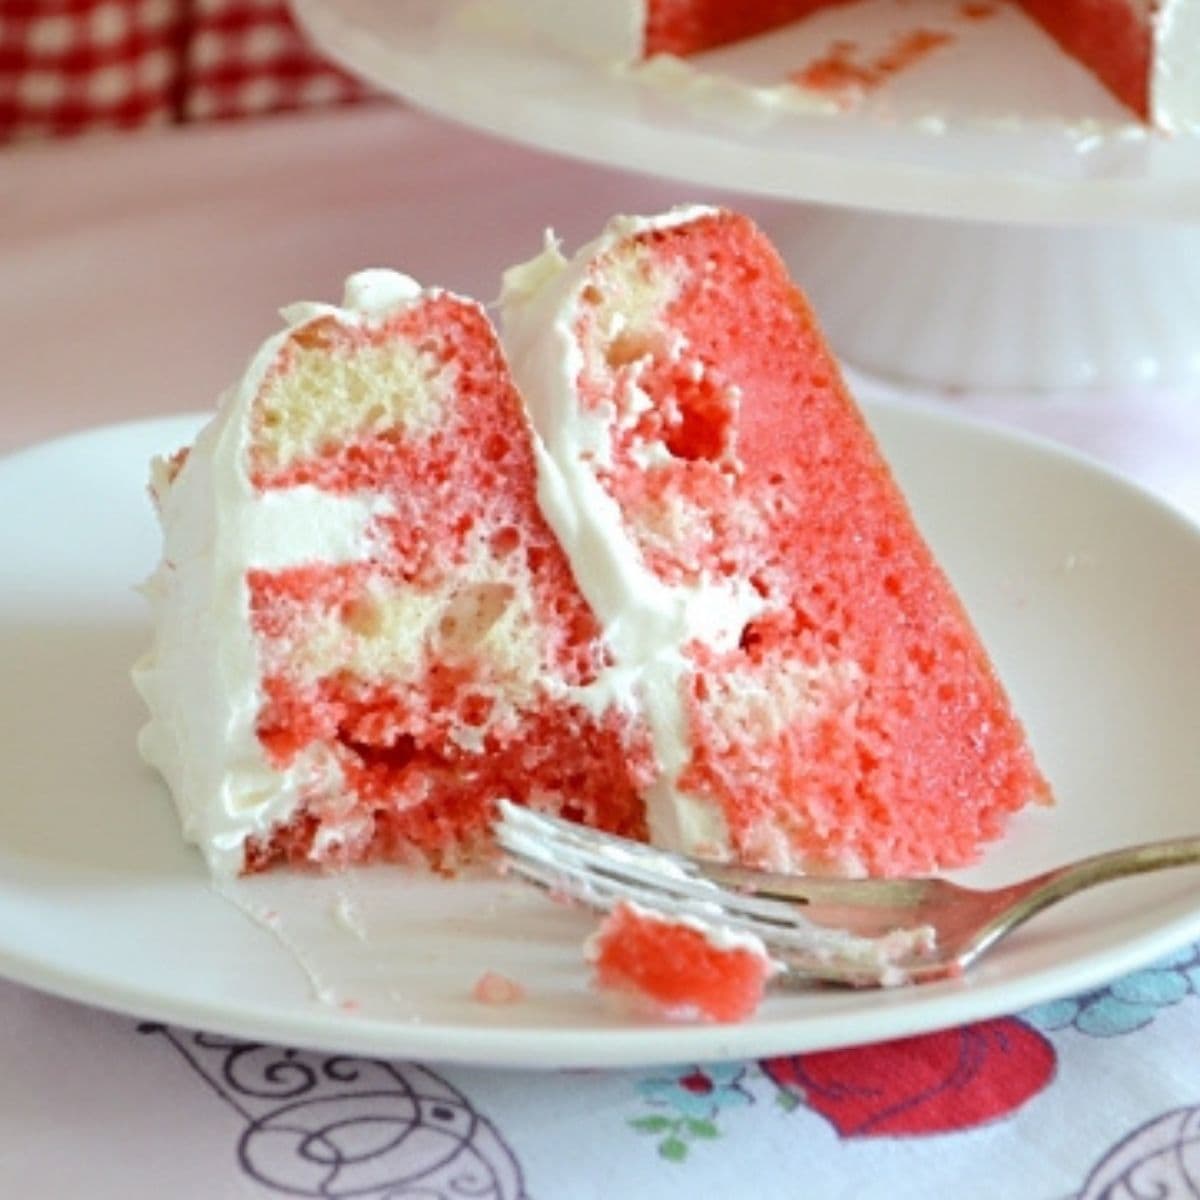 A slice of Strawberry poke cake on a dessert plate.